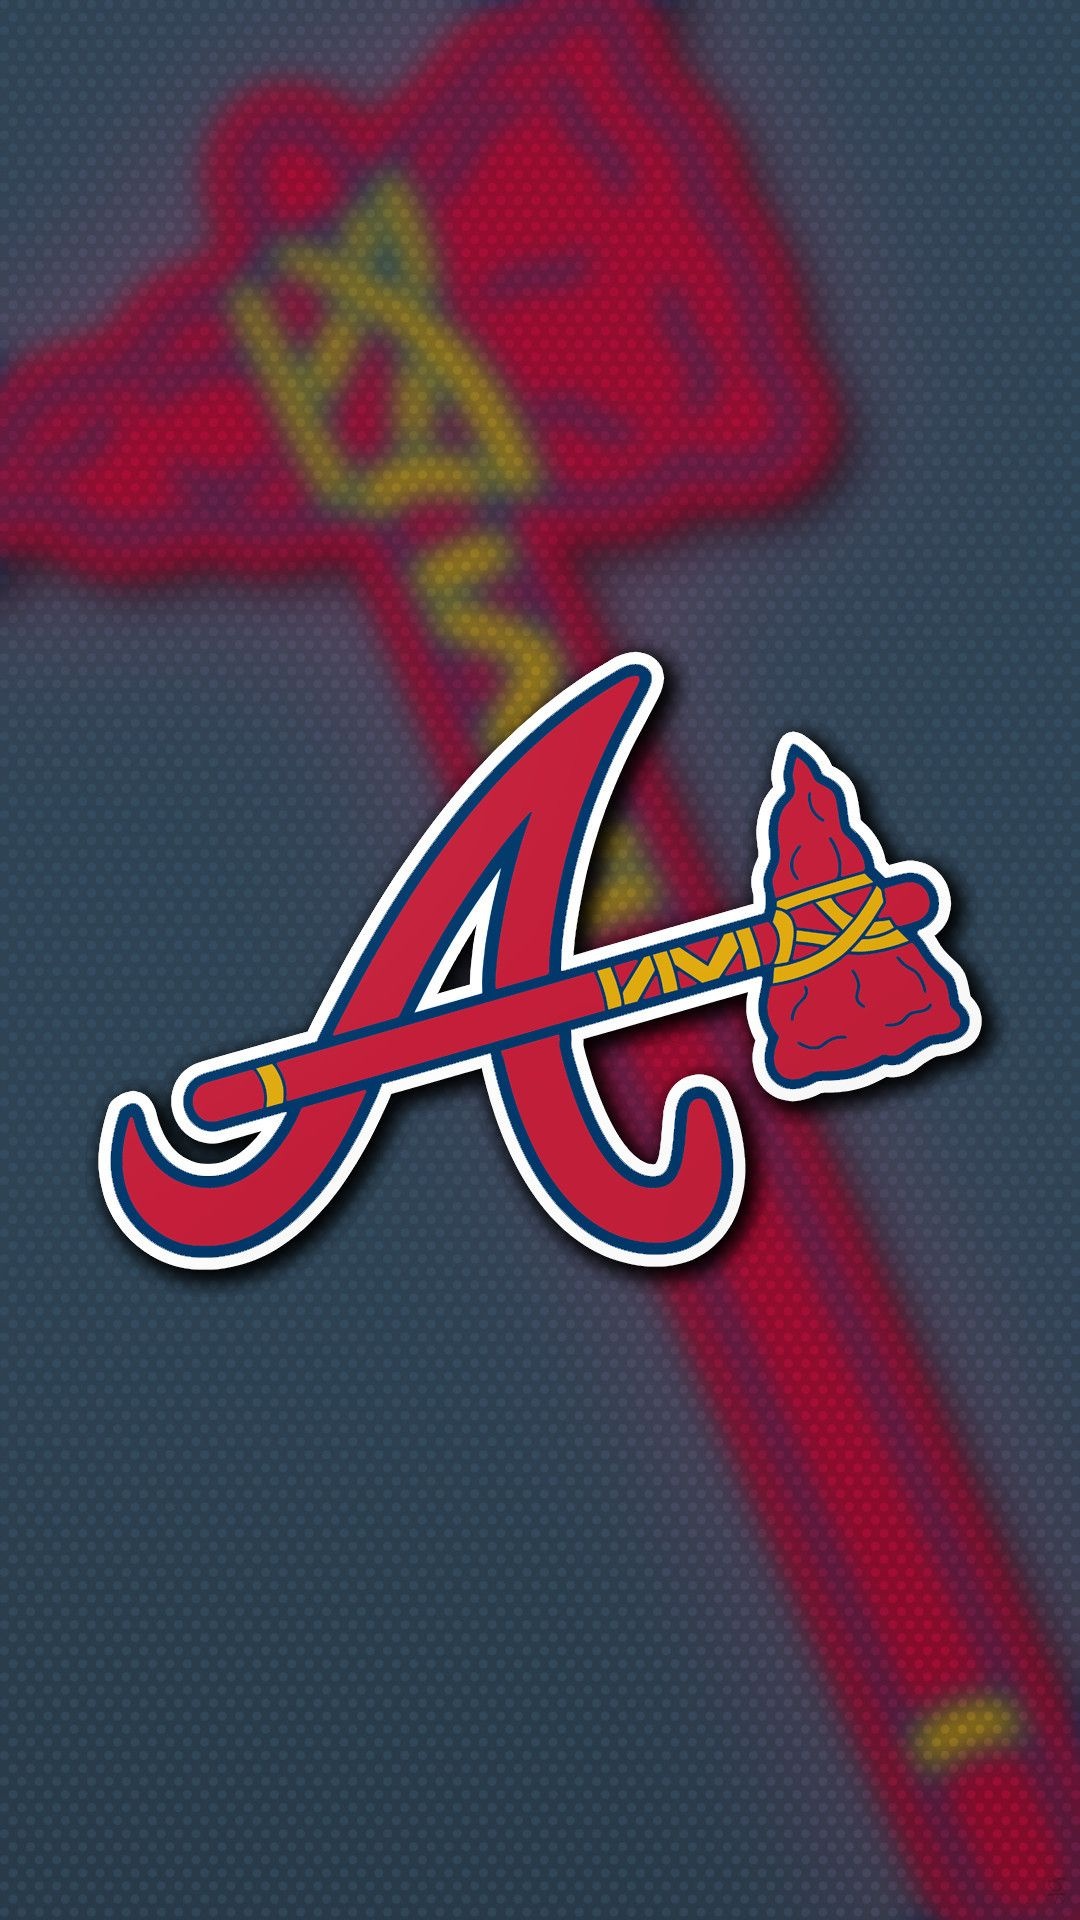 Atlanta Braves, Team wallpapers, Fan support, Baseball spirit, 1080x1920 Full HD Handy